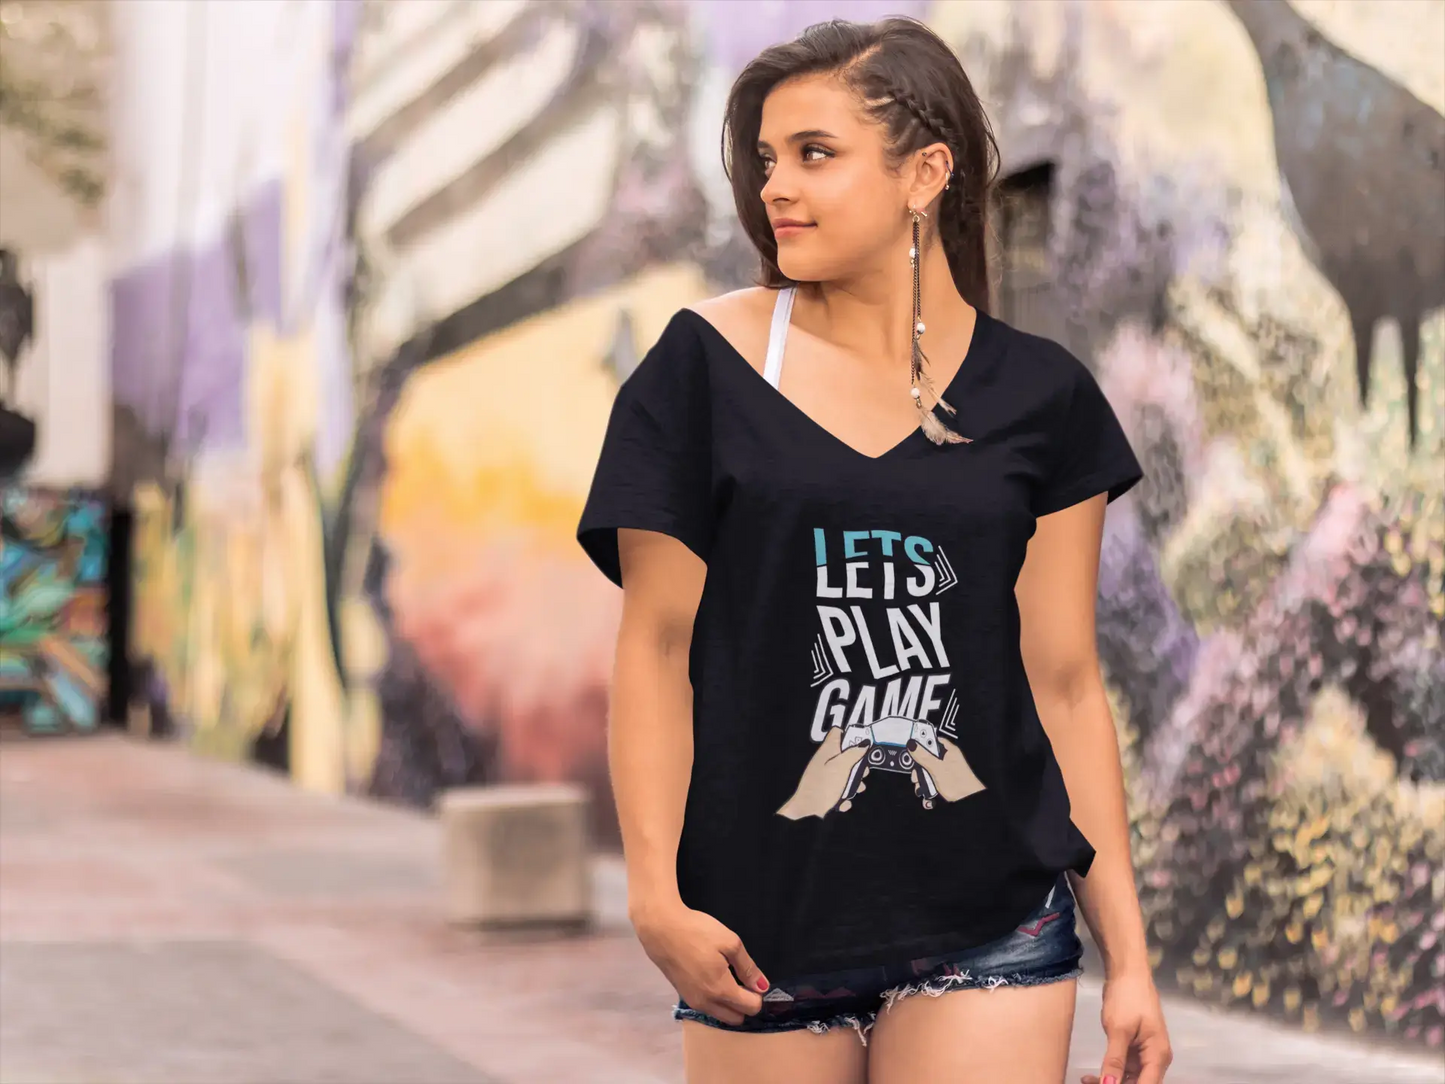 ULTRABASIC Women's Gaming T-Shirt Let's Play Game - Gamer Tee Shirt Tops